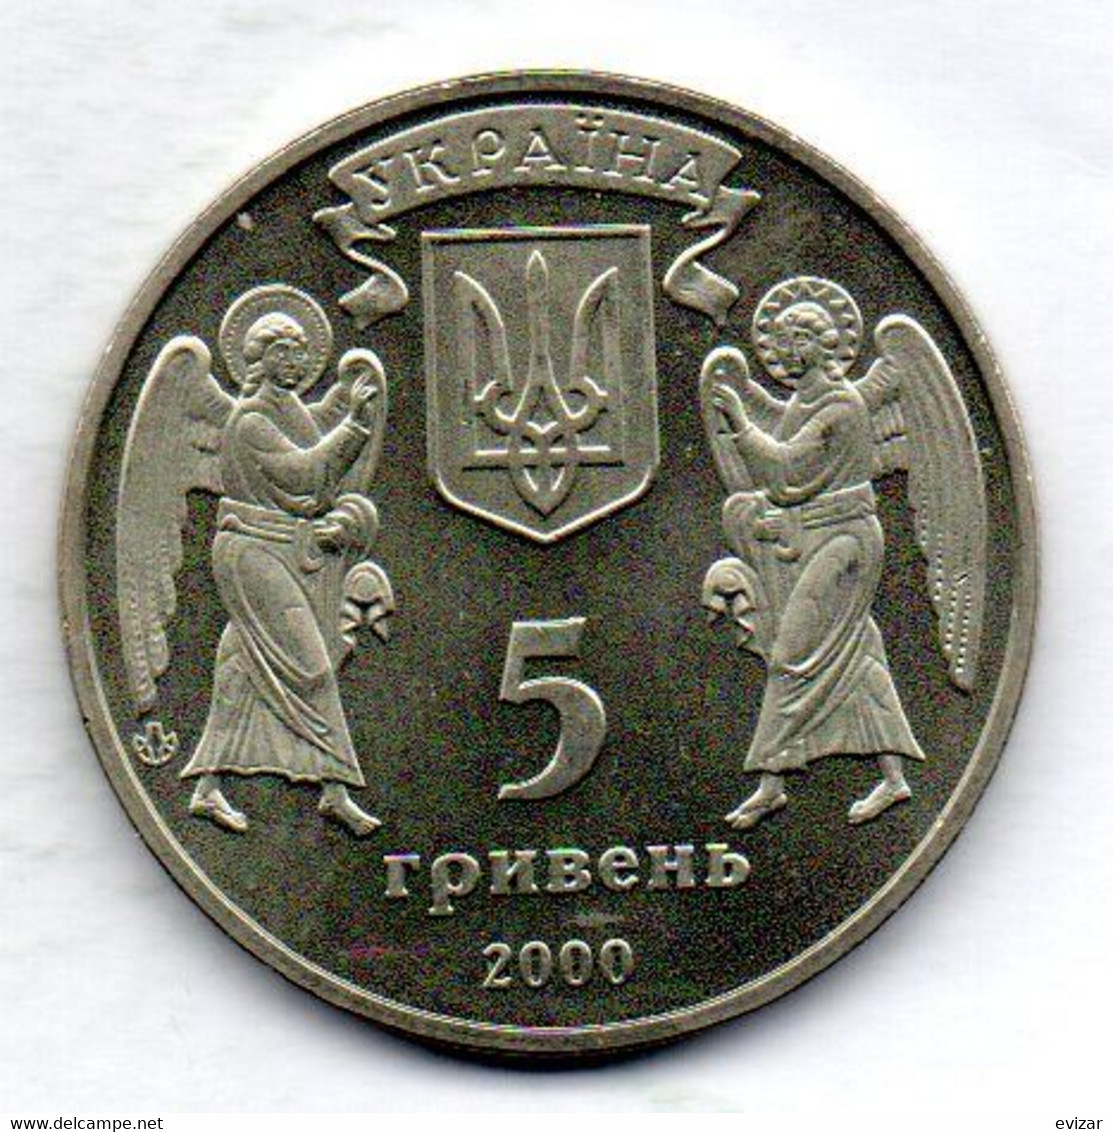 UKRANIA, 5 Hryvnia, Copper-Nickel-Zinc, Year 2000, KM #102 - Ukraine